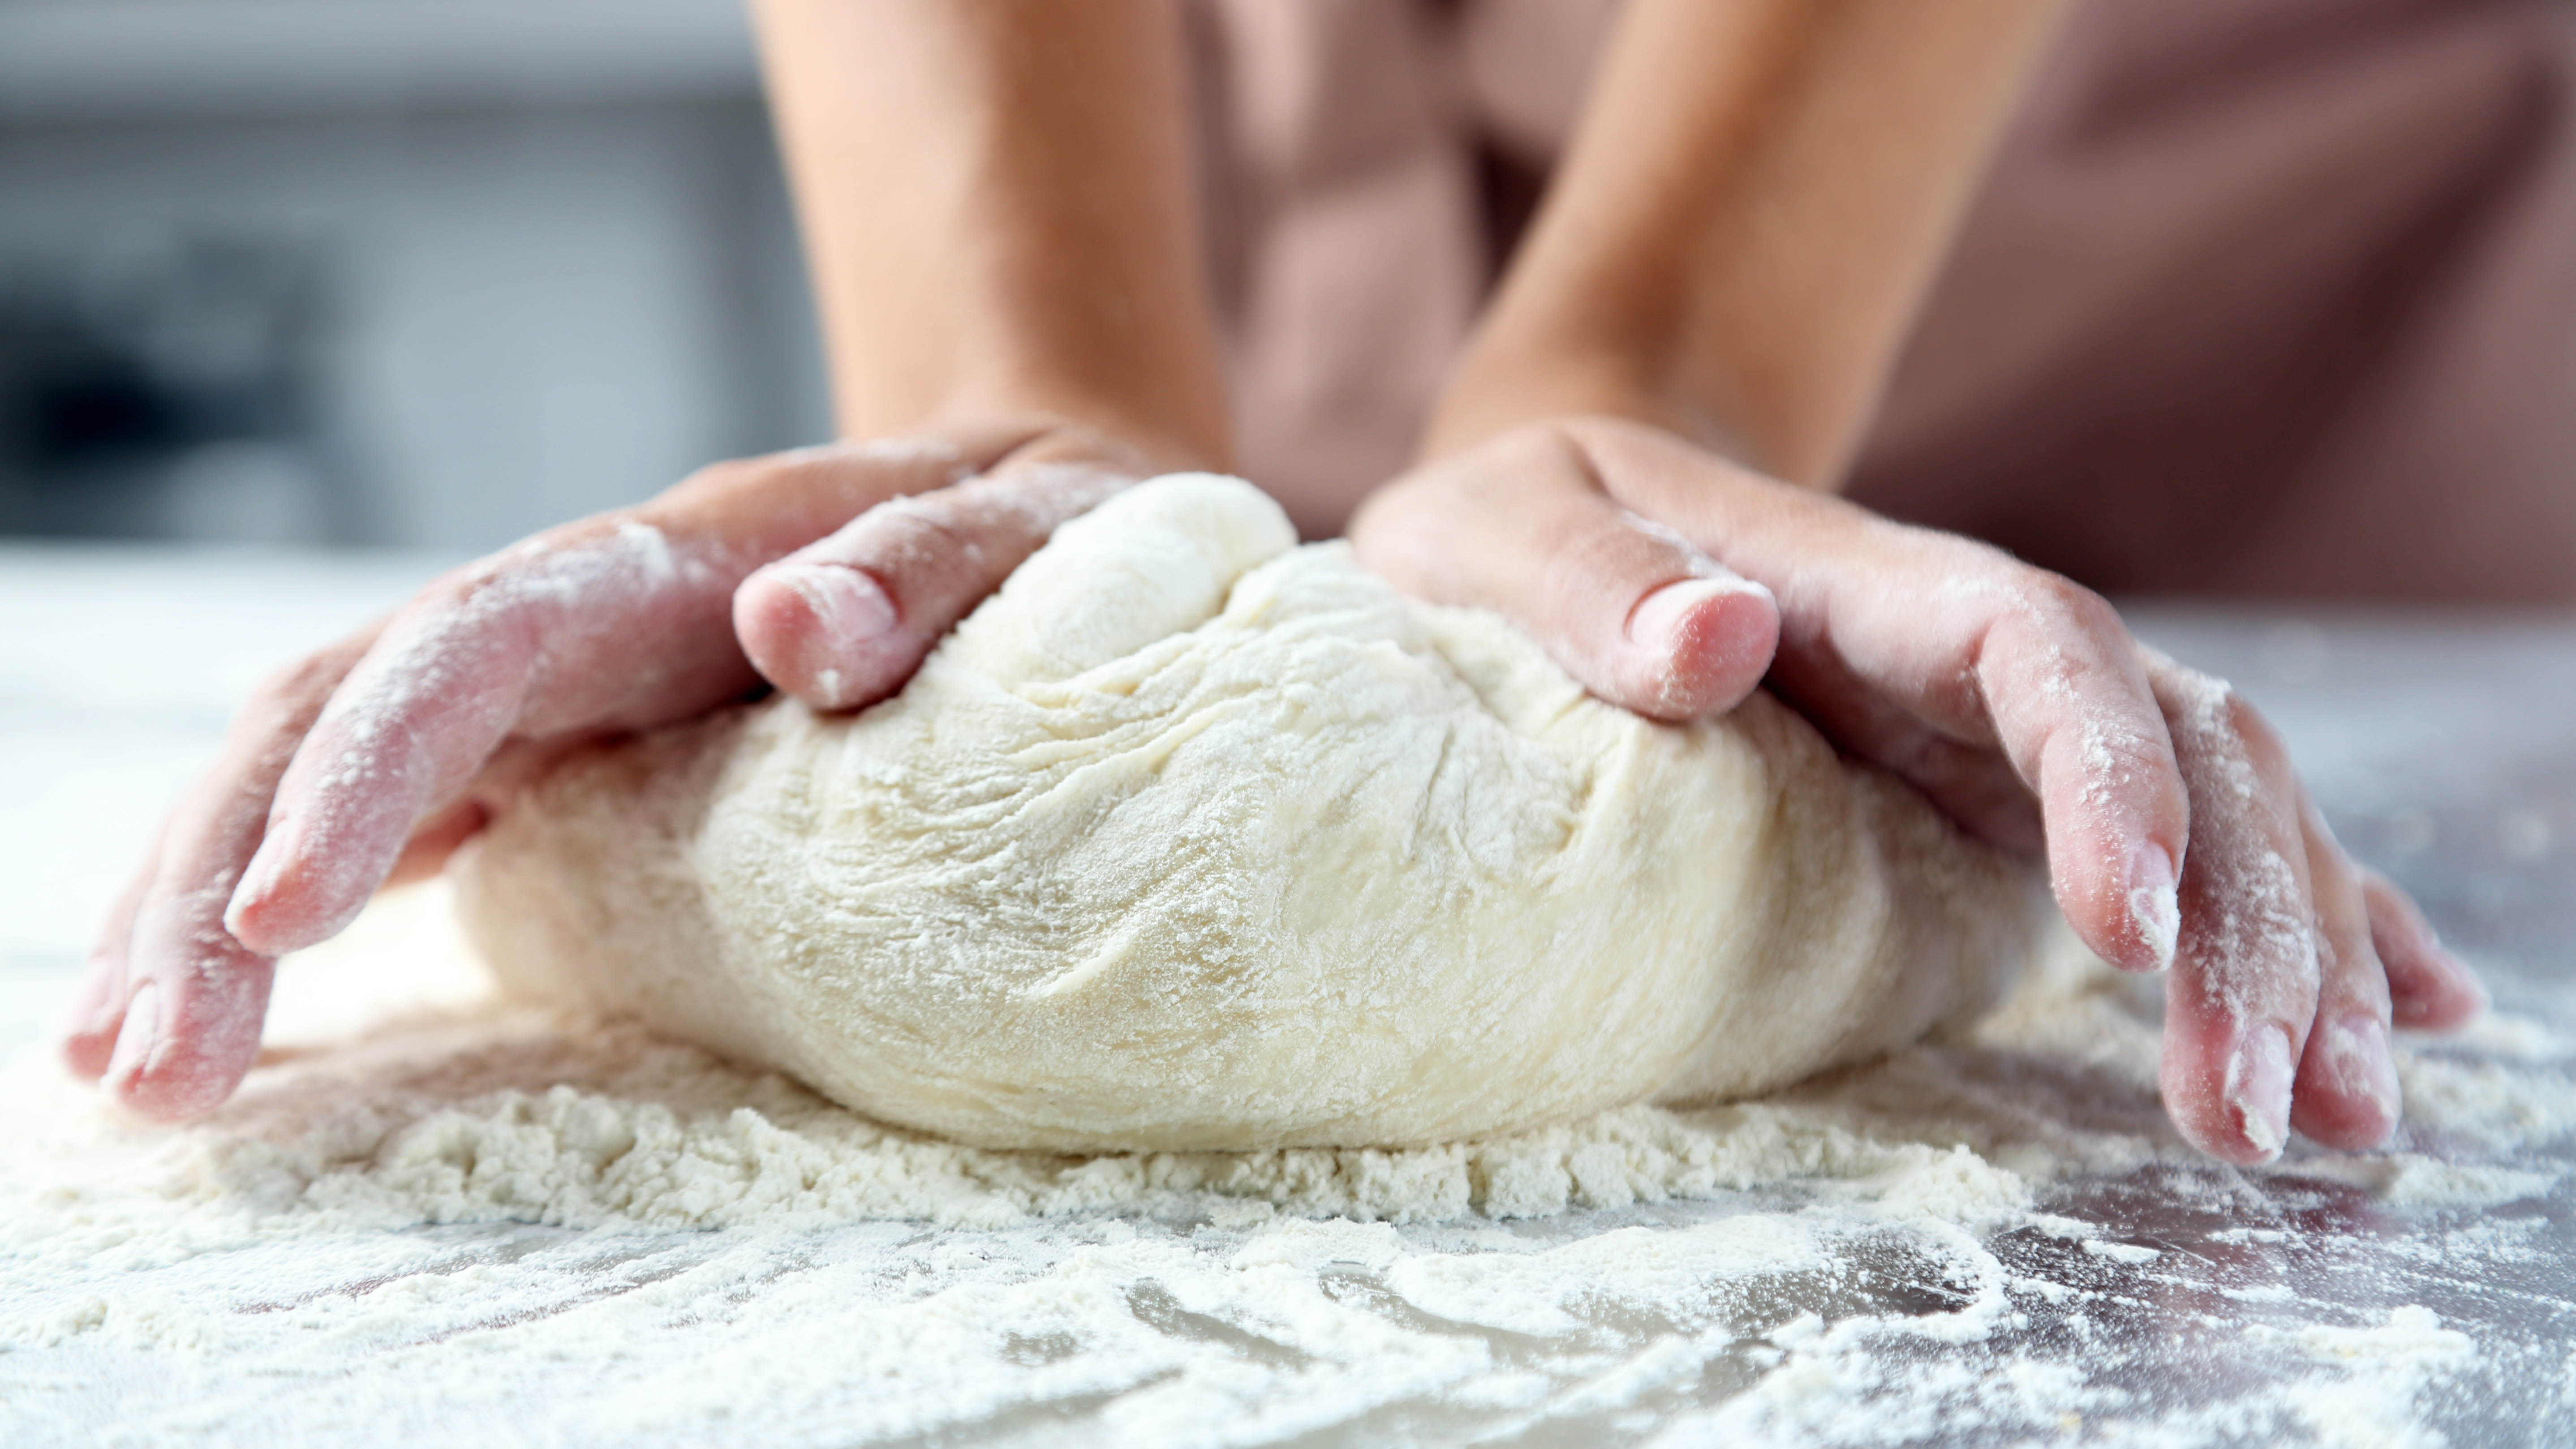 Из муки делают тесто. Месить тесто. Руки месят тесто. Замешивание теста. Вымешиваем тесто руками.